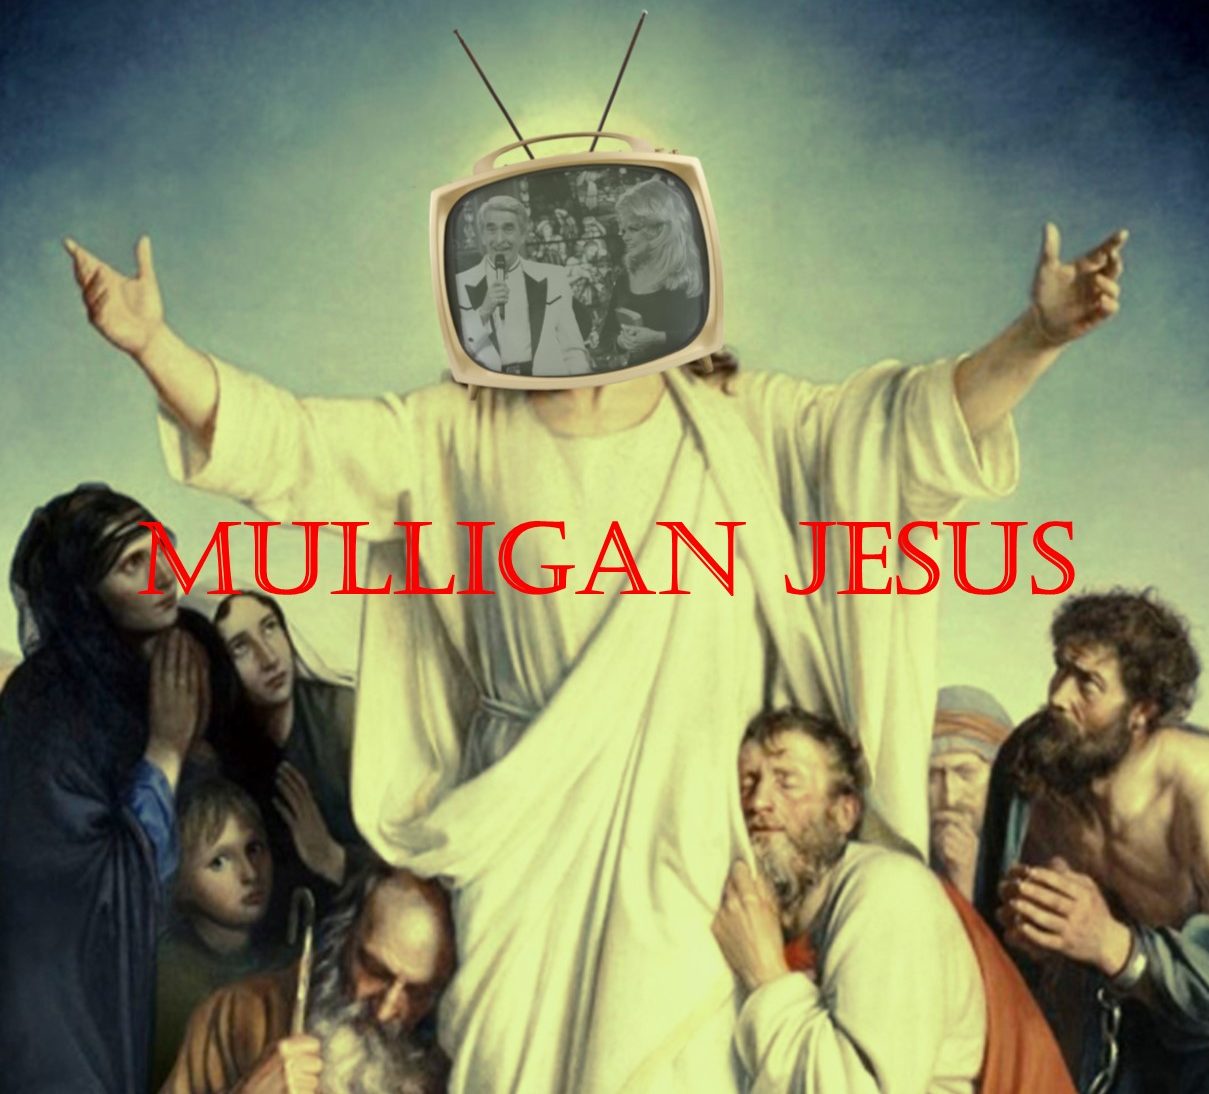 Mulligan Jesus: The Do Over Deity